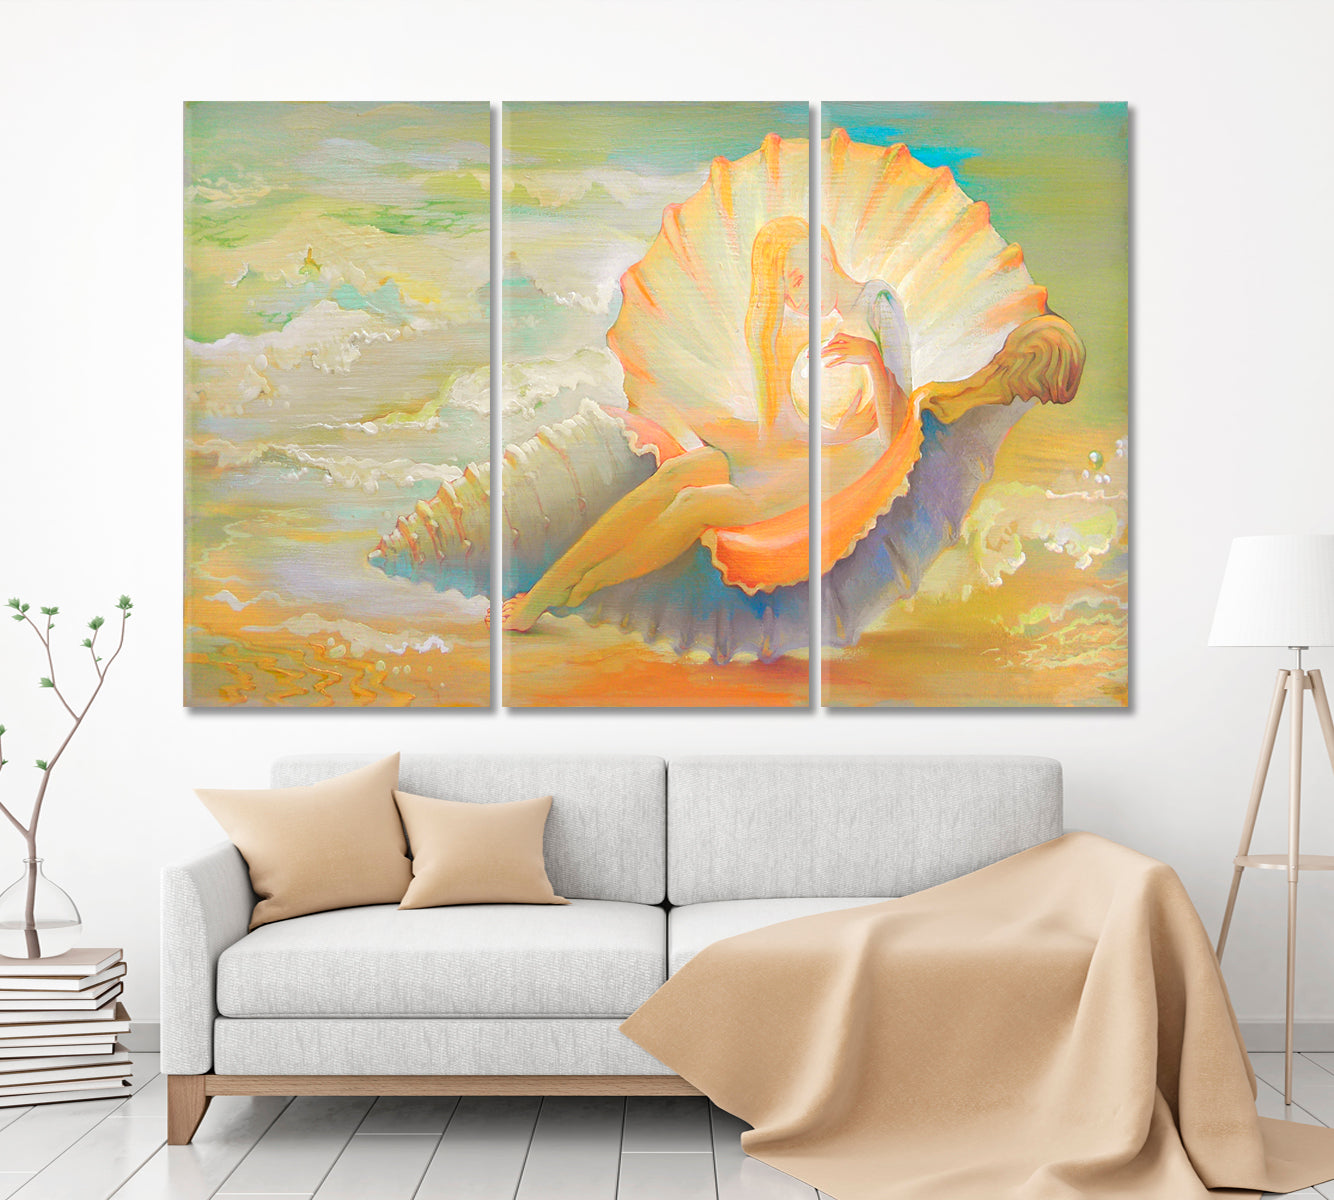 Princess of Seashell Artistic Fantastic Soft Colors Contemporary Art Artesty 3 panels 36" x 24" 